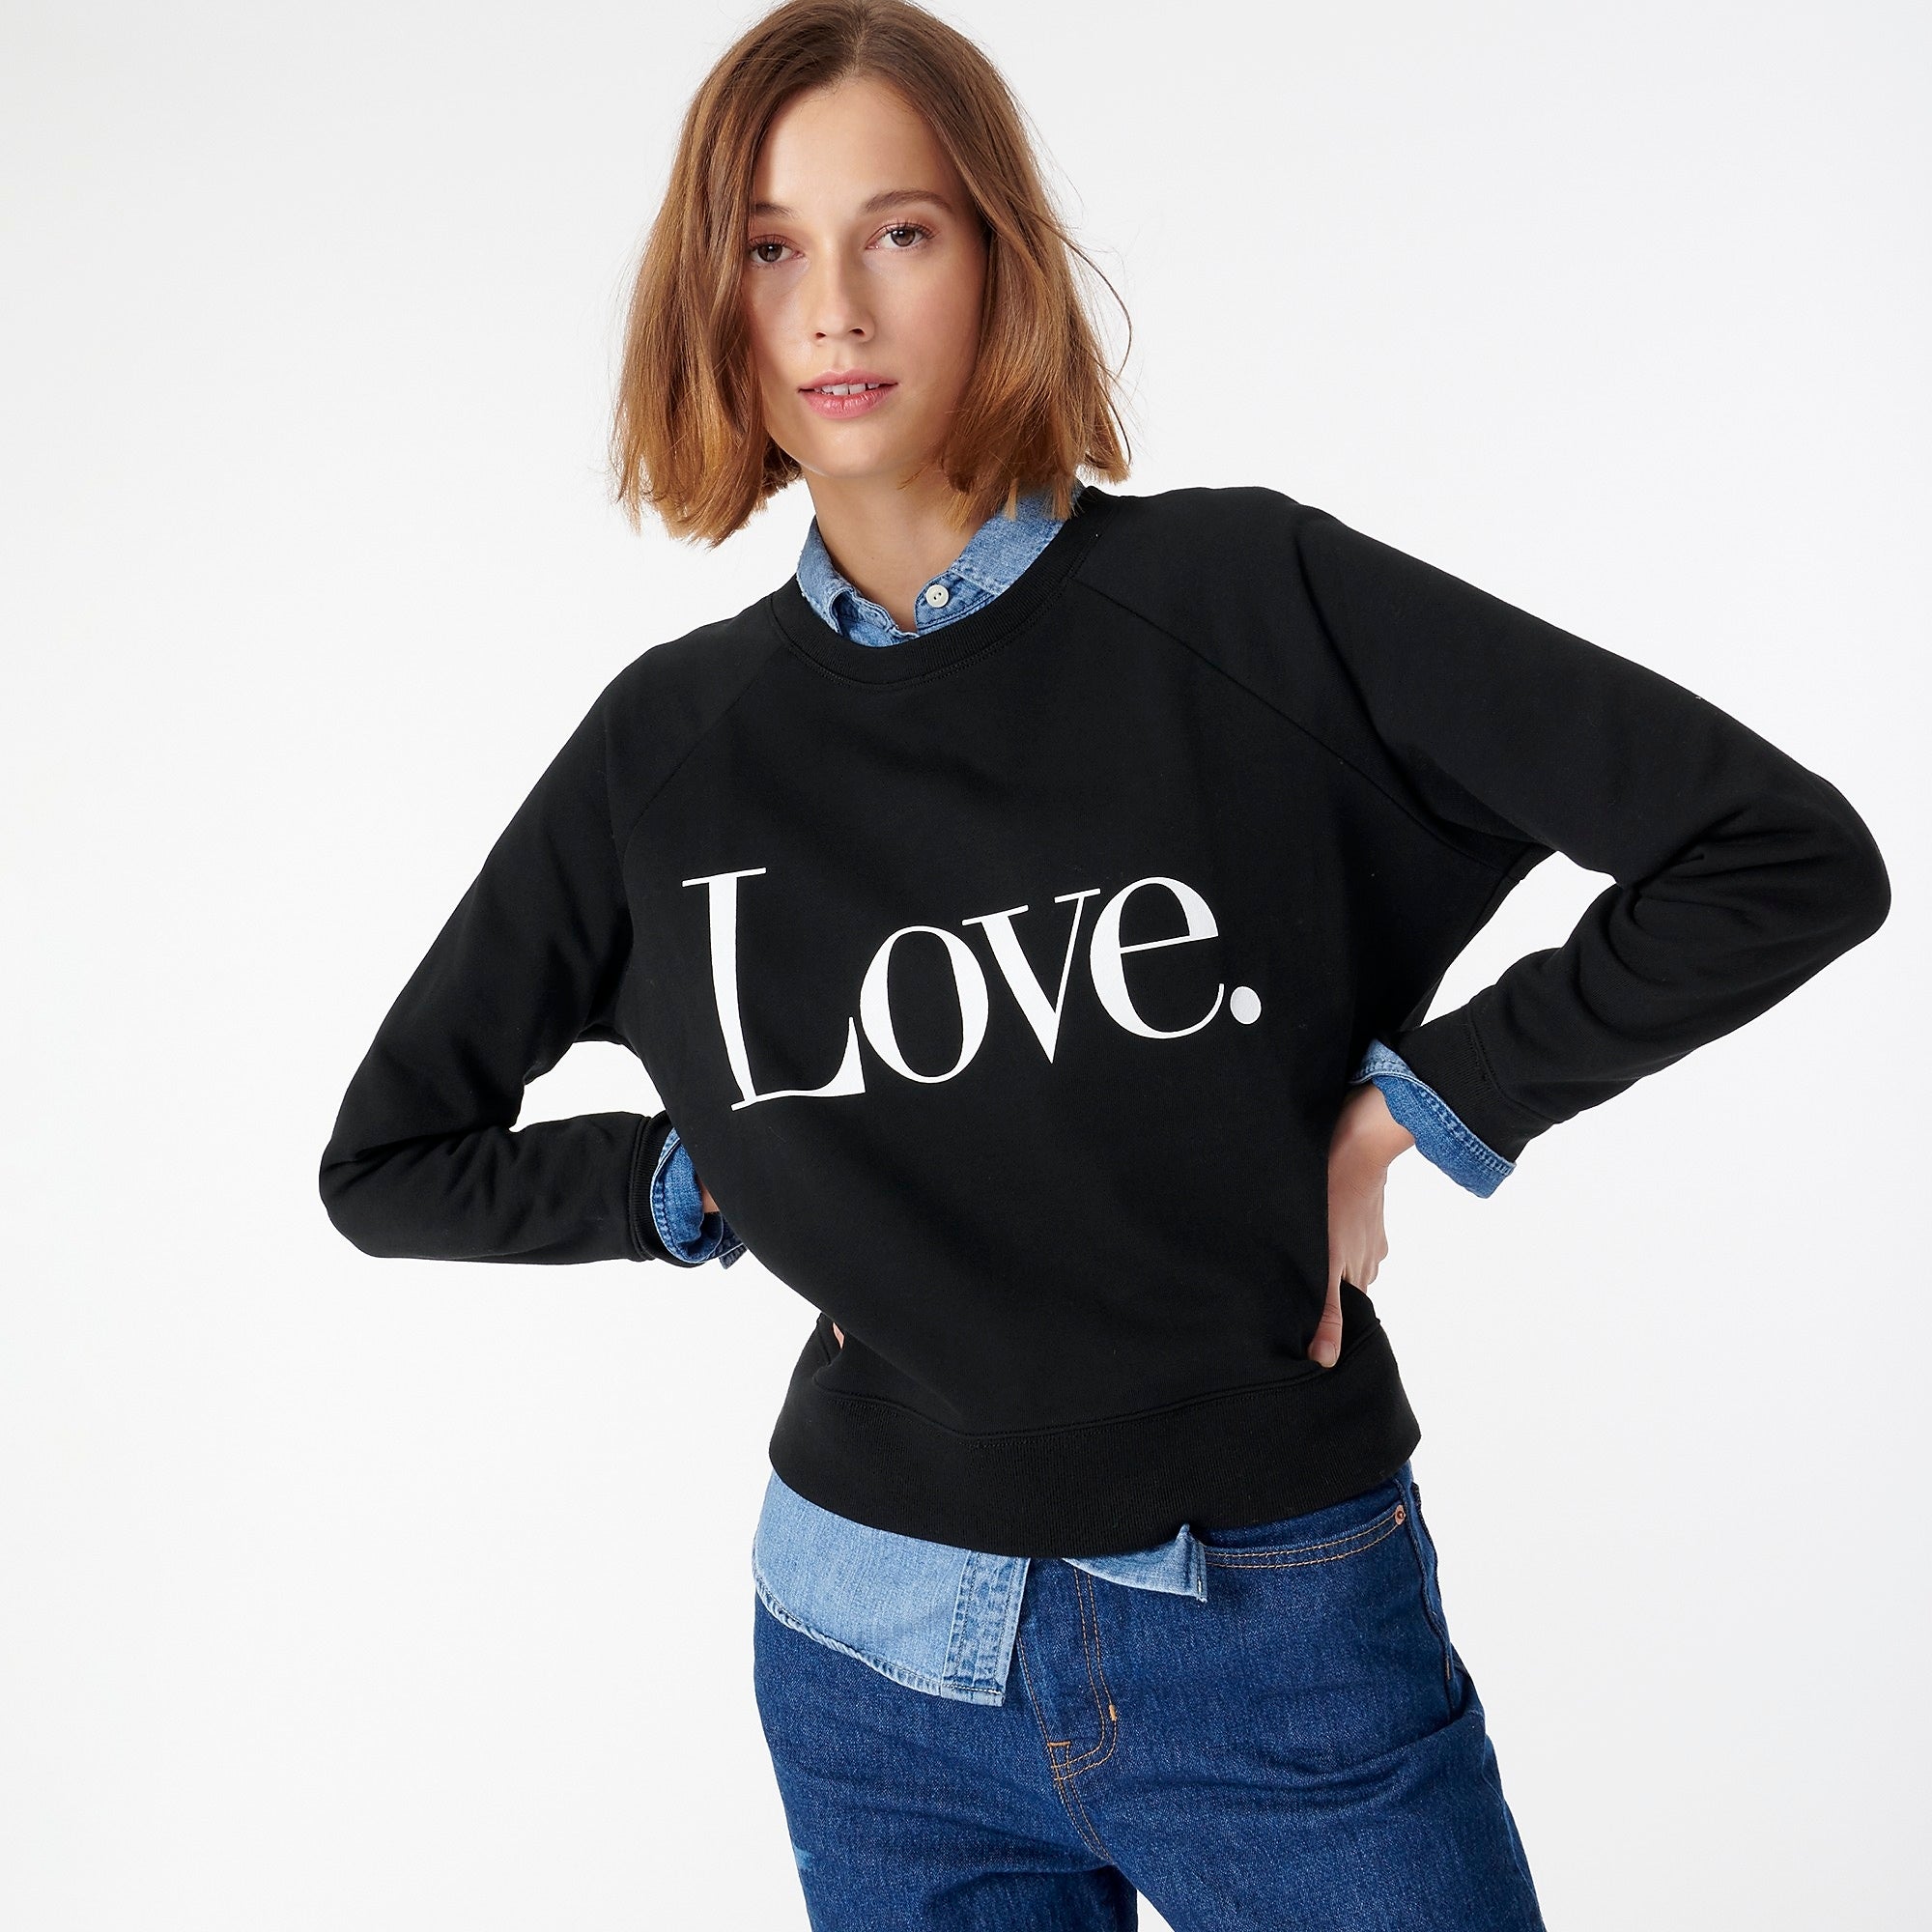 J. Crew + University terry “Love” sweatshirt